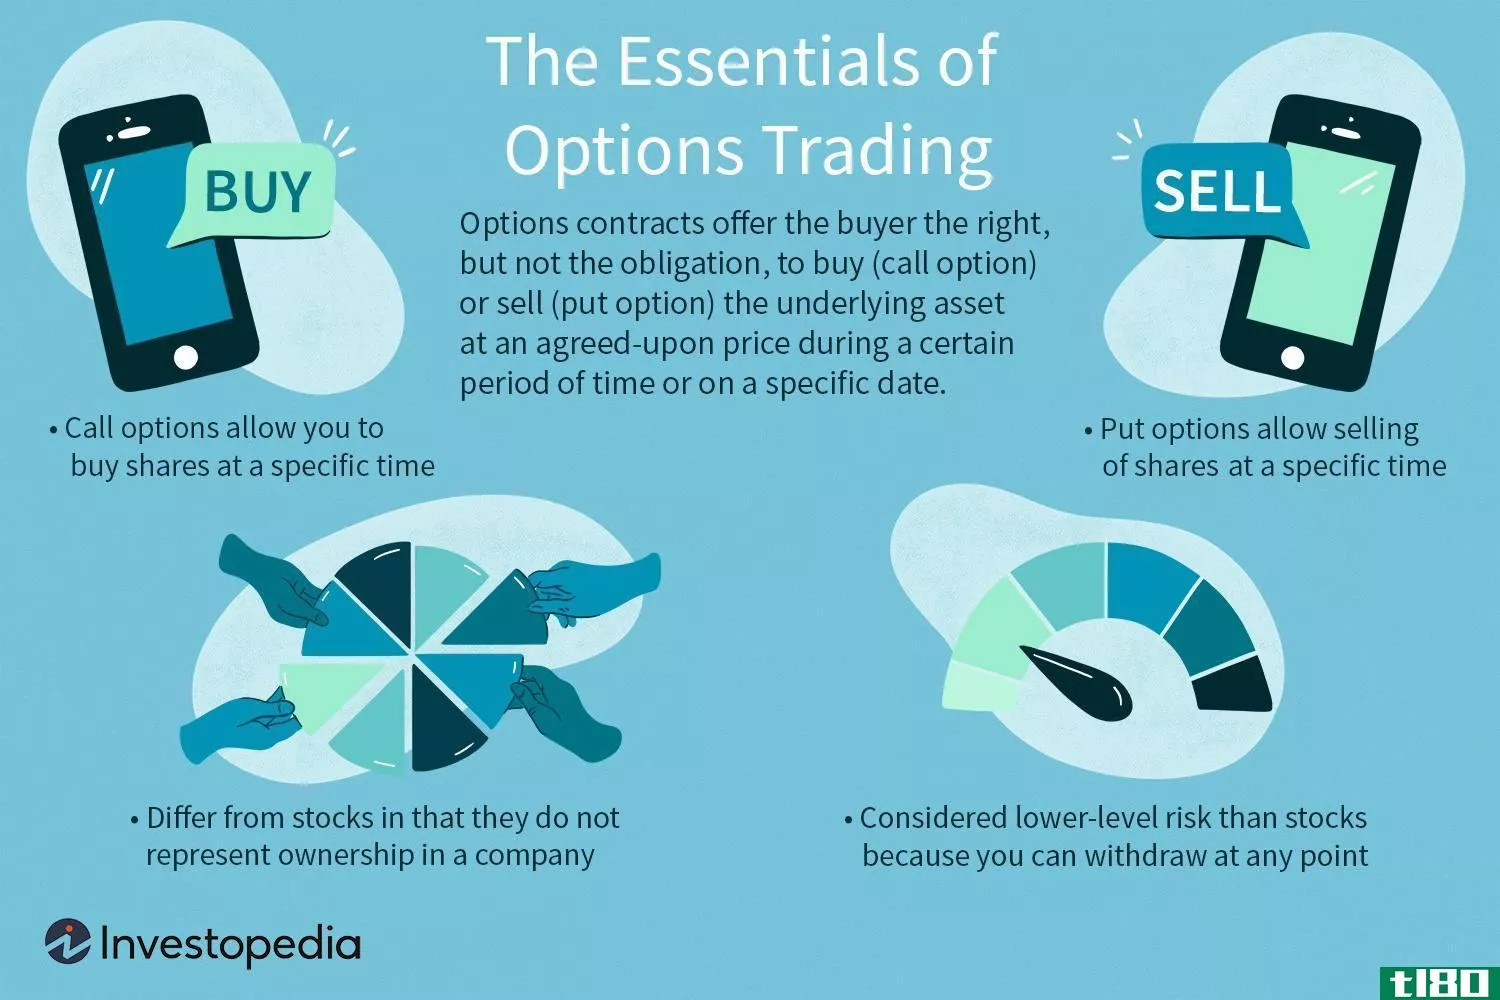 The Essentials of Opti*** Trading